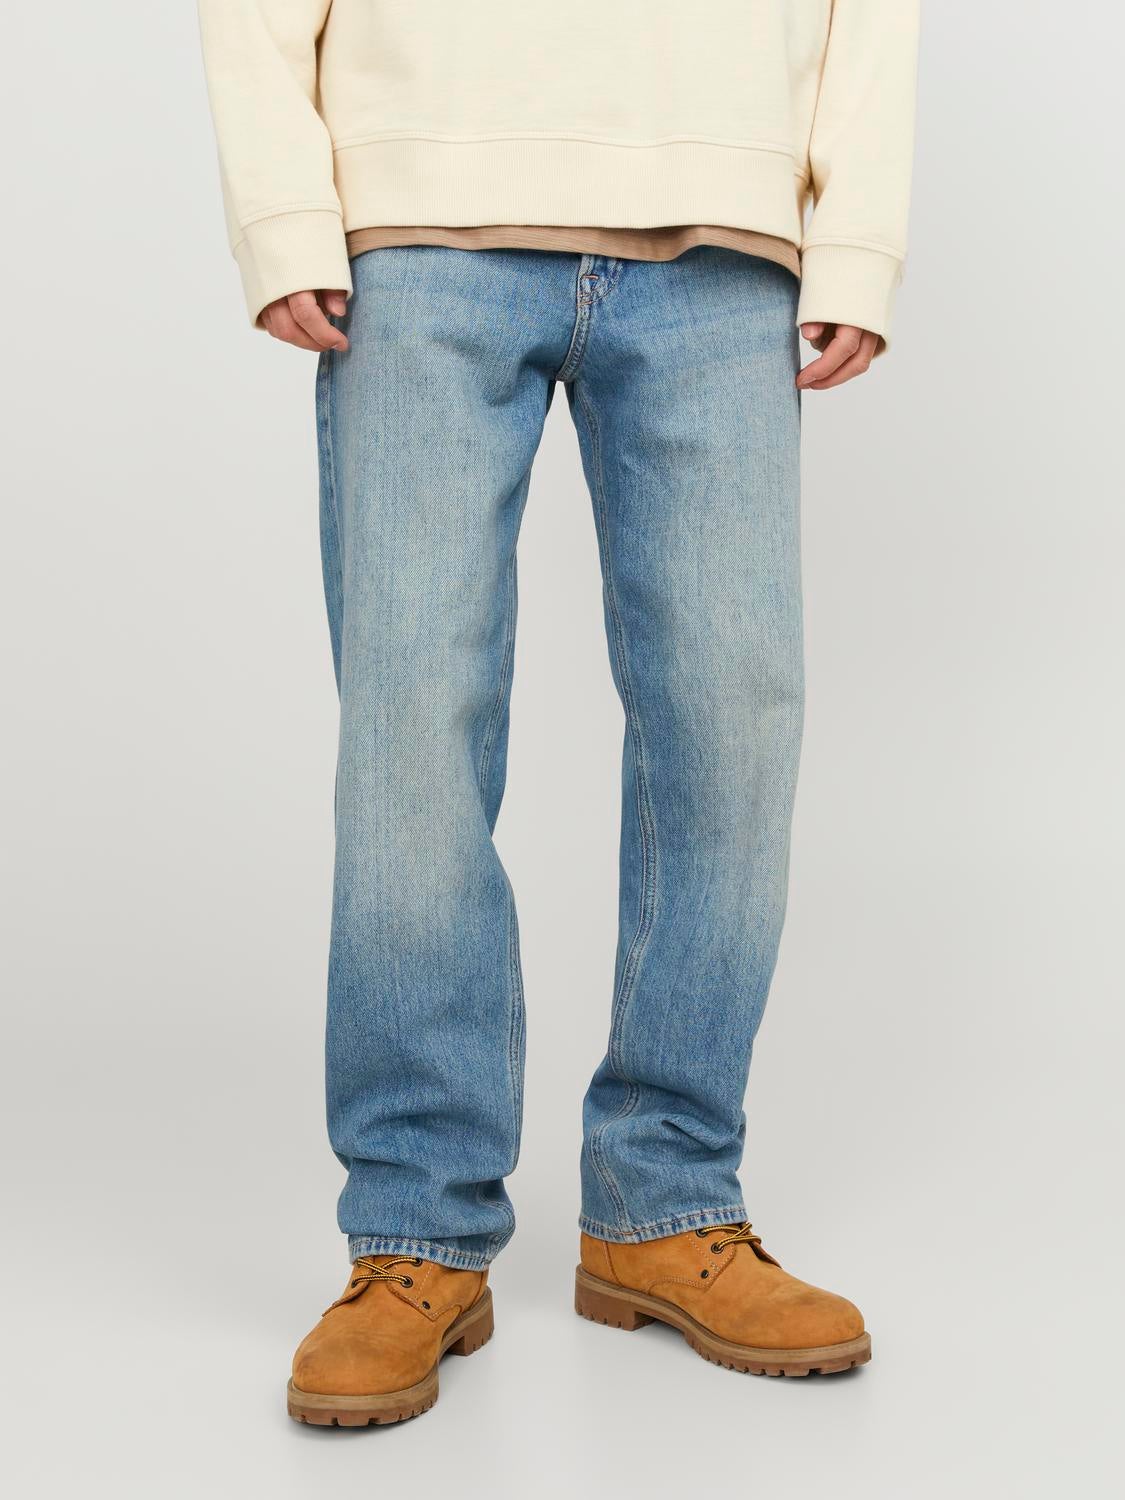 JACK & JONES Slim Fit Glenn Jeans Men's W31/L30 Ripped Faded Stretchy  Buttons | eBay